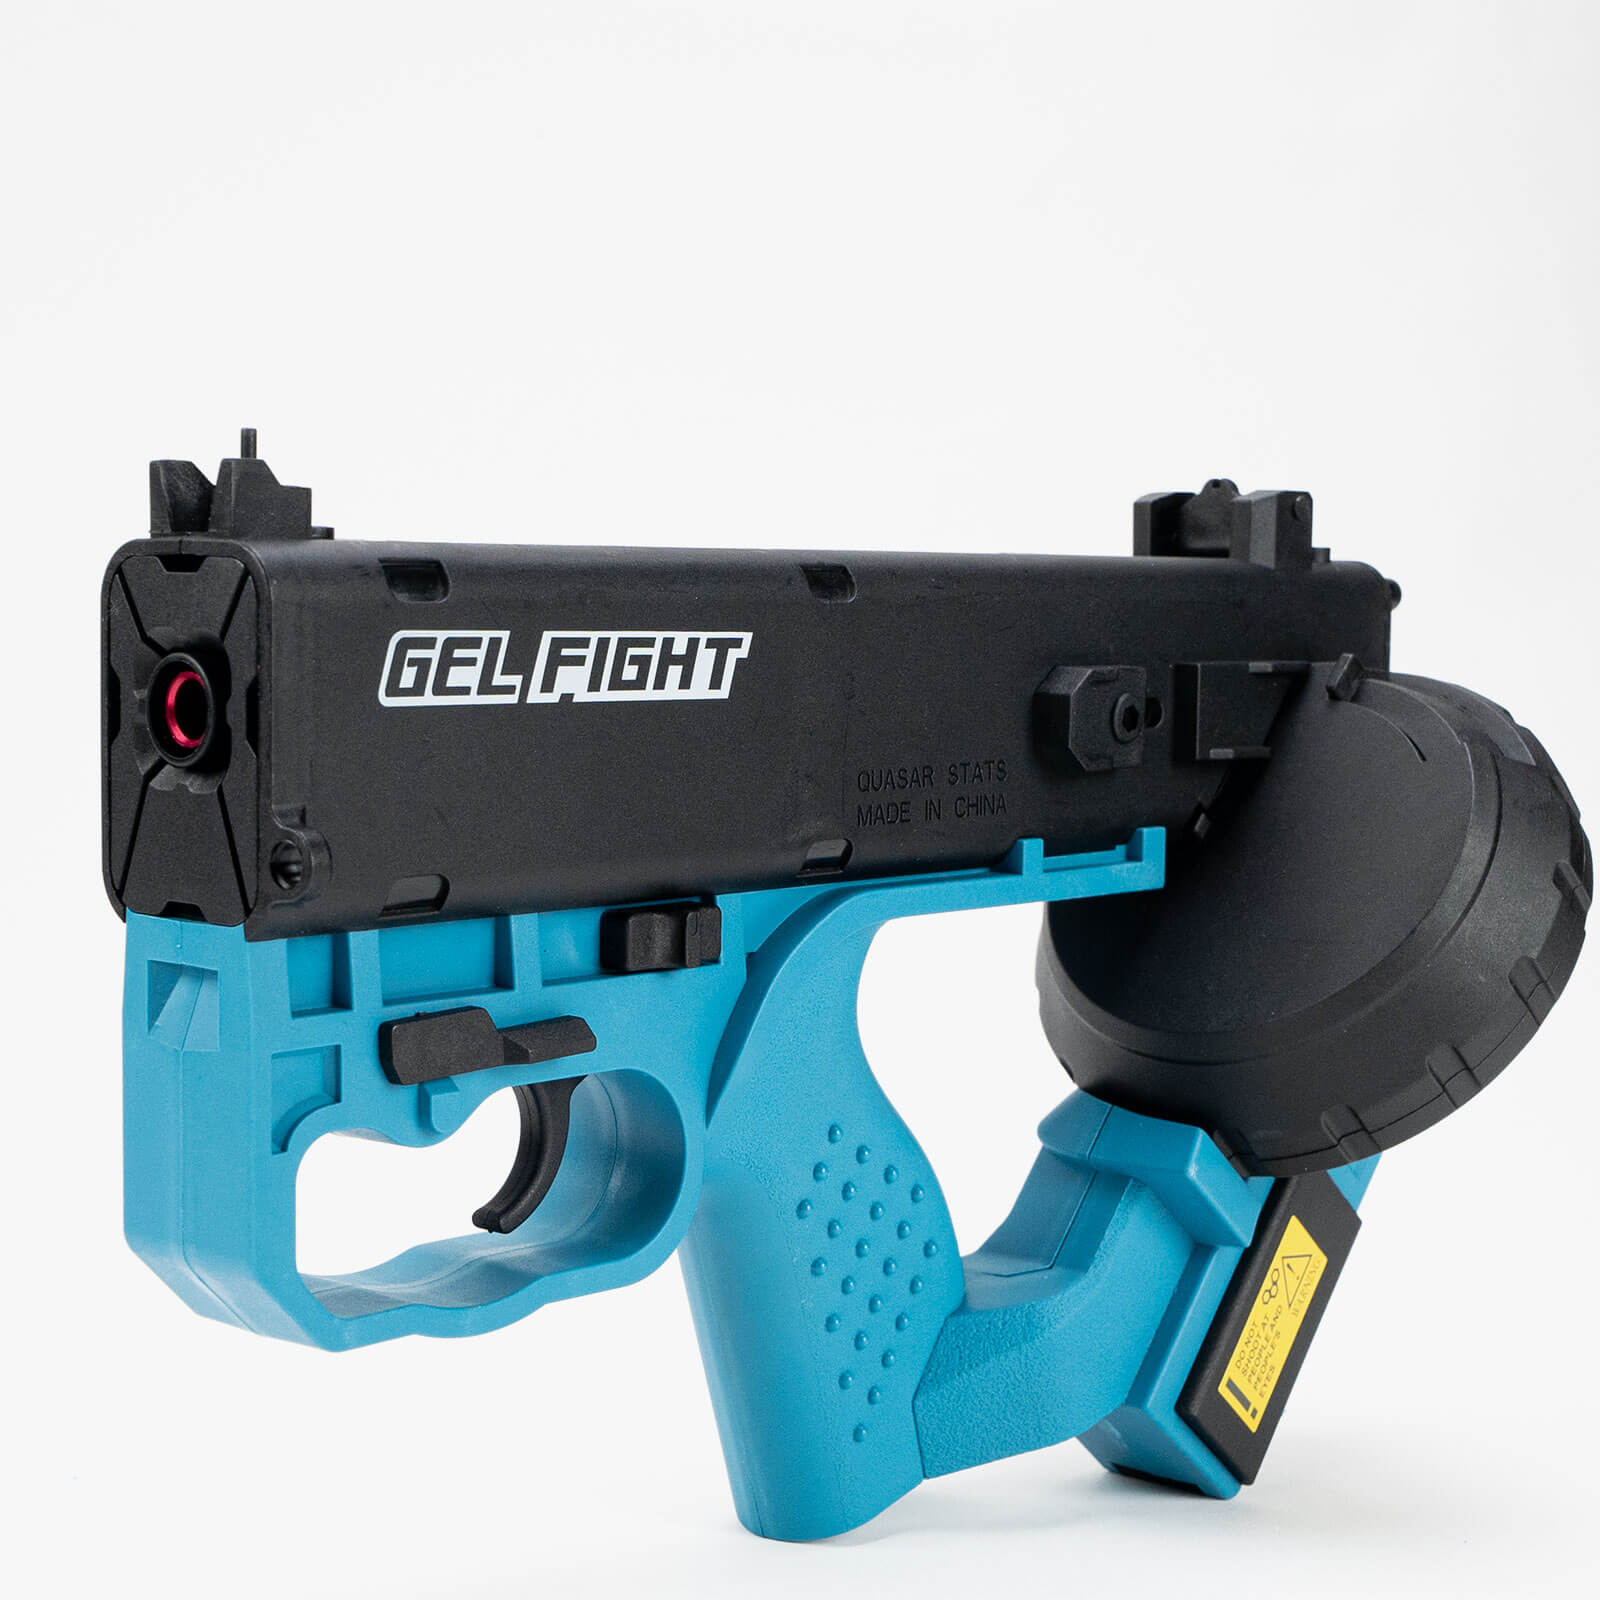 Electric Gel Ball Blaster Toy Gun, Cyberpunk 2077 Tech Weapon Toy DR12 QUASAR Gel Blaster Revolver Toy Gun